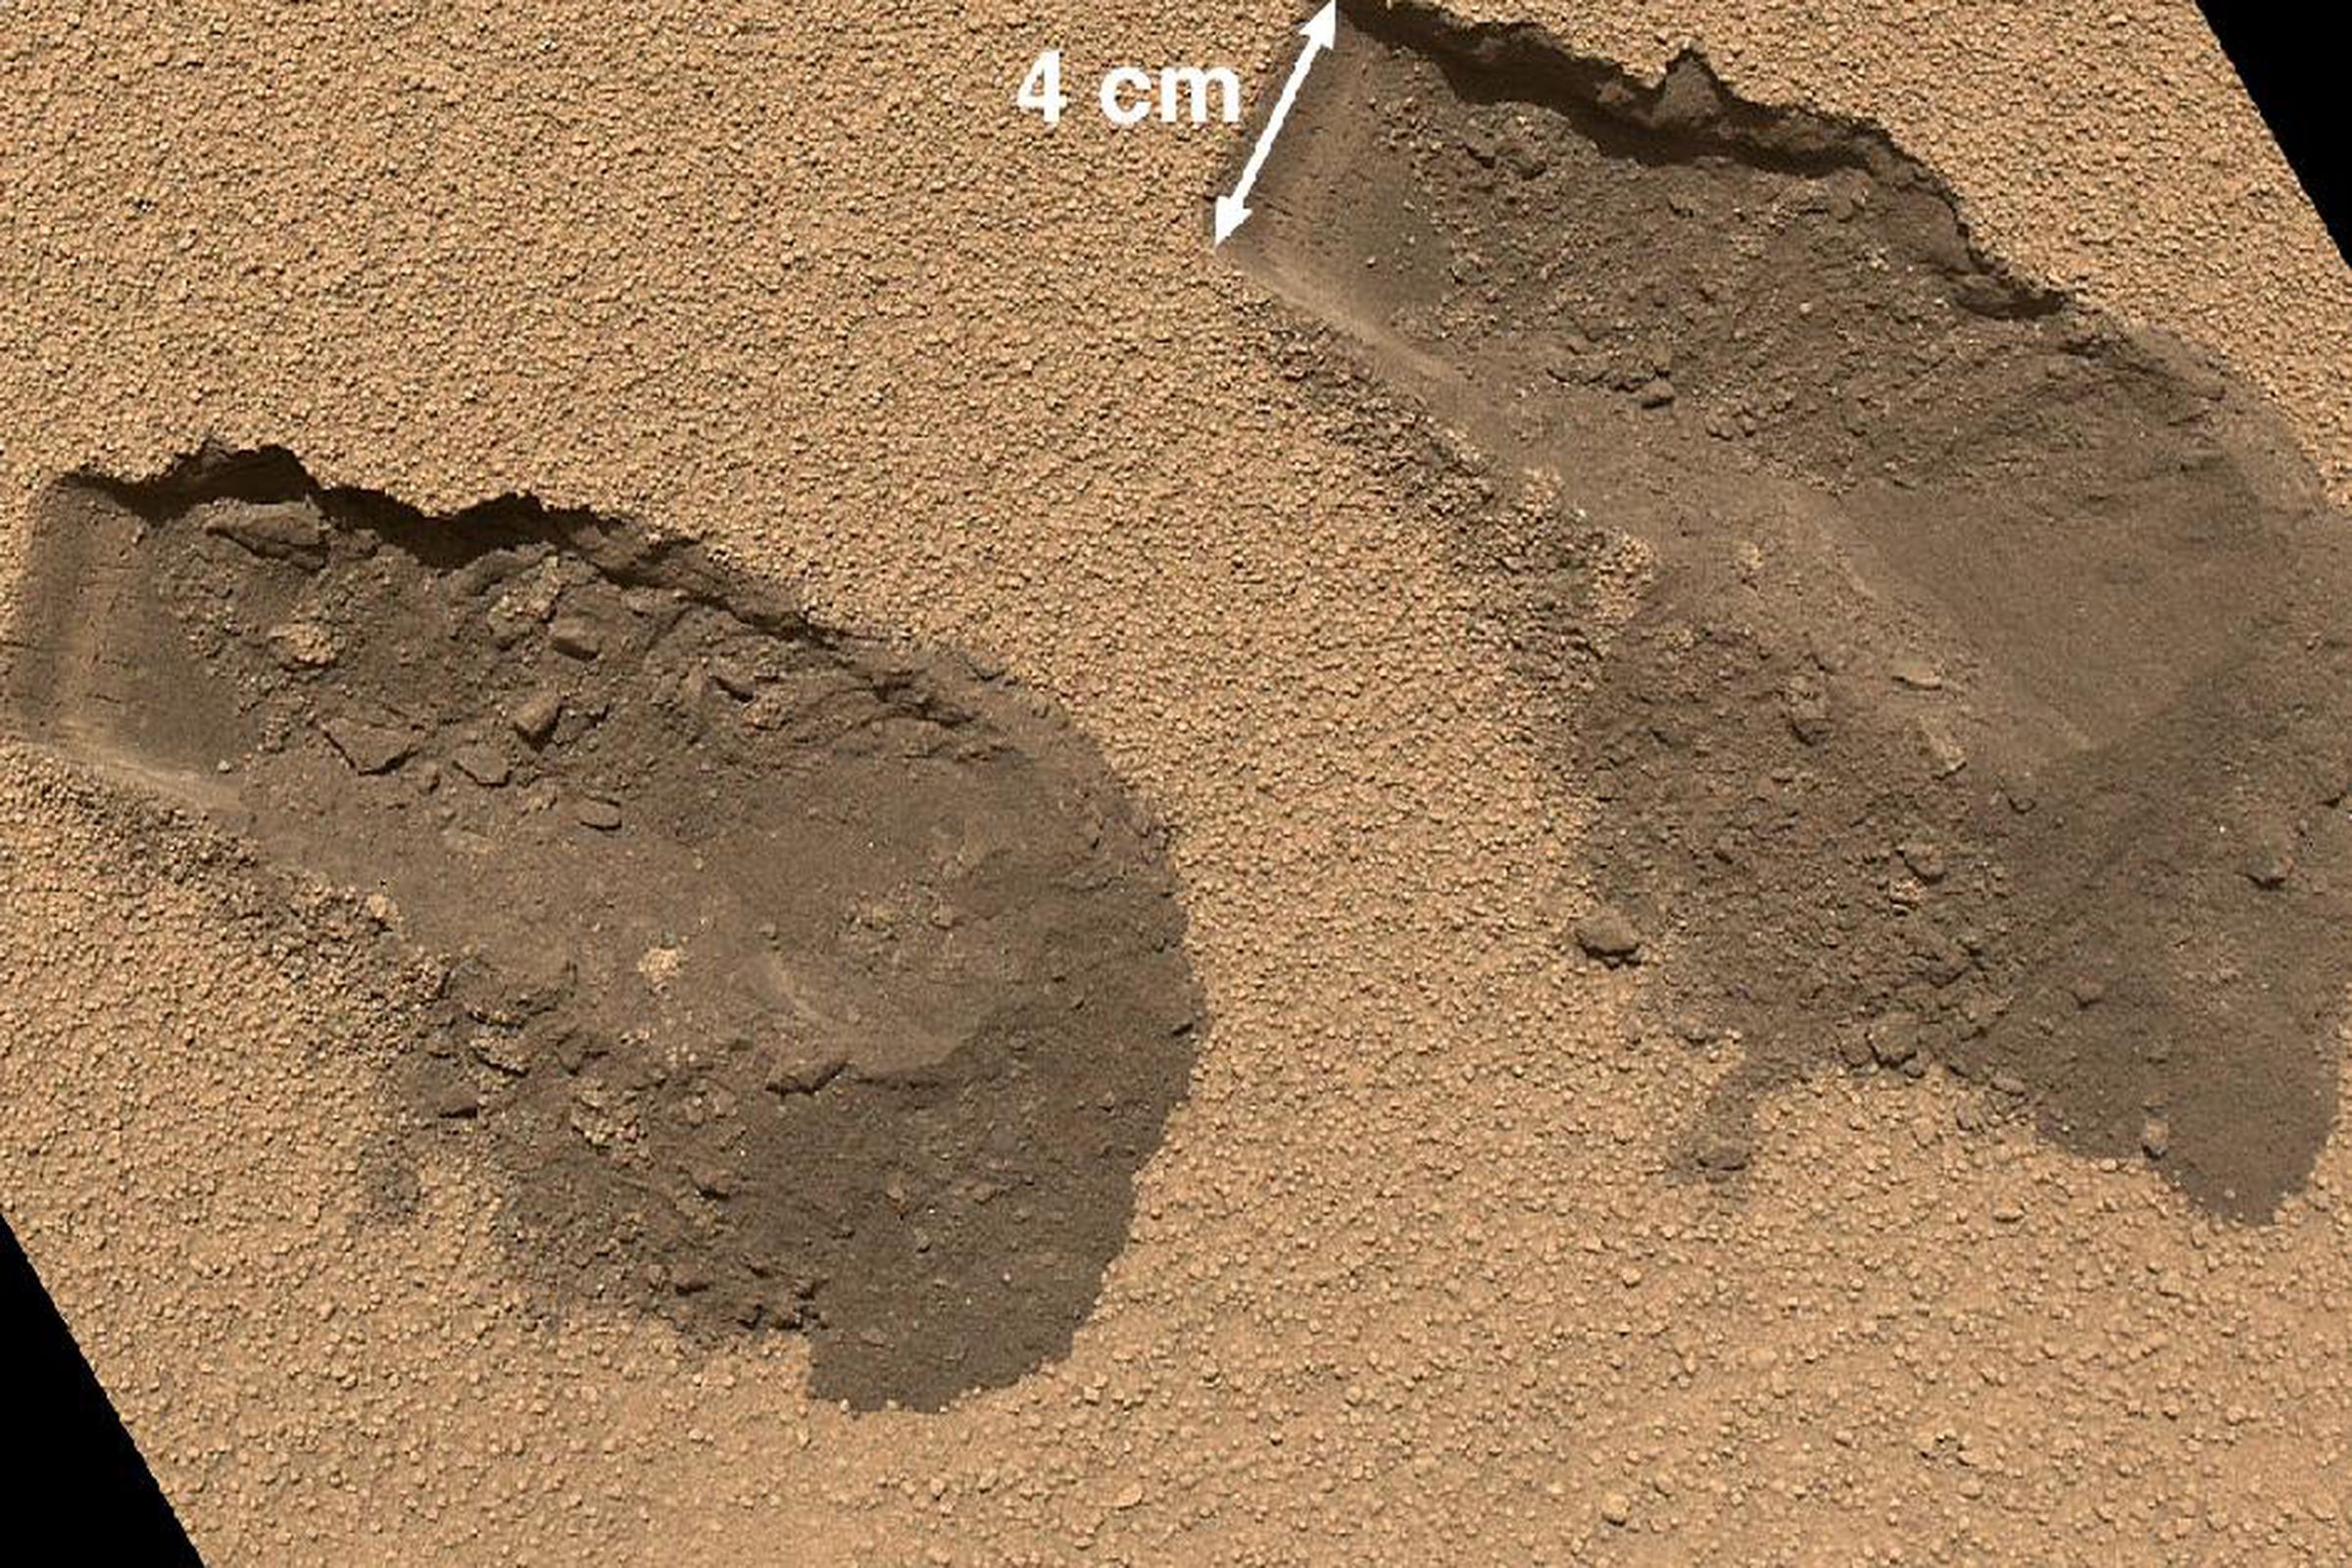 Curiosity soil scoops